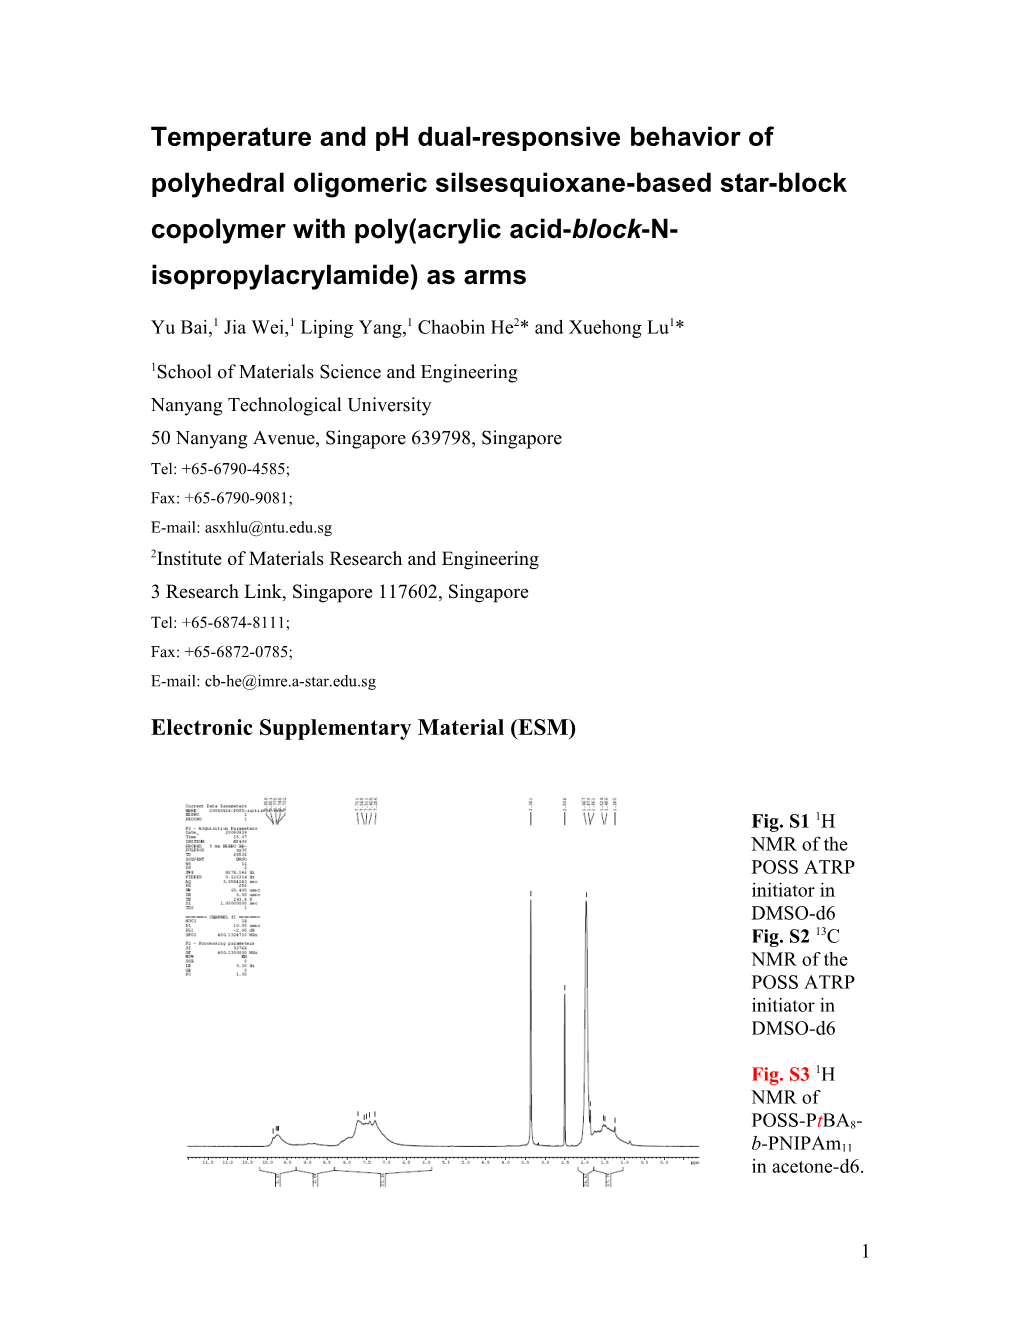 Temperature and Ph Dual-Responsive Behavior of Polyhedral Oligomeric Silsesquioxane-Based